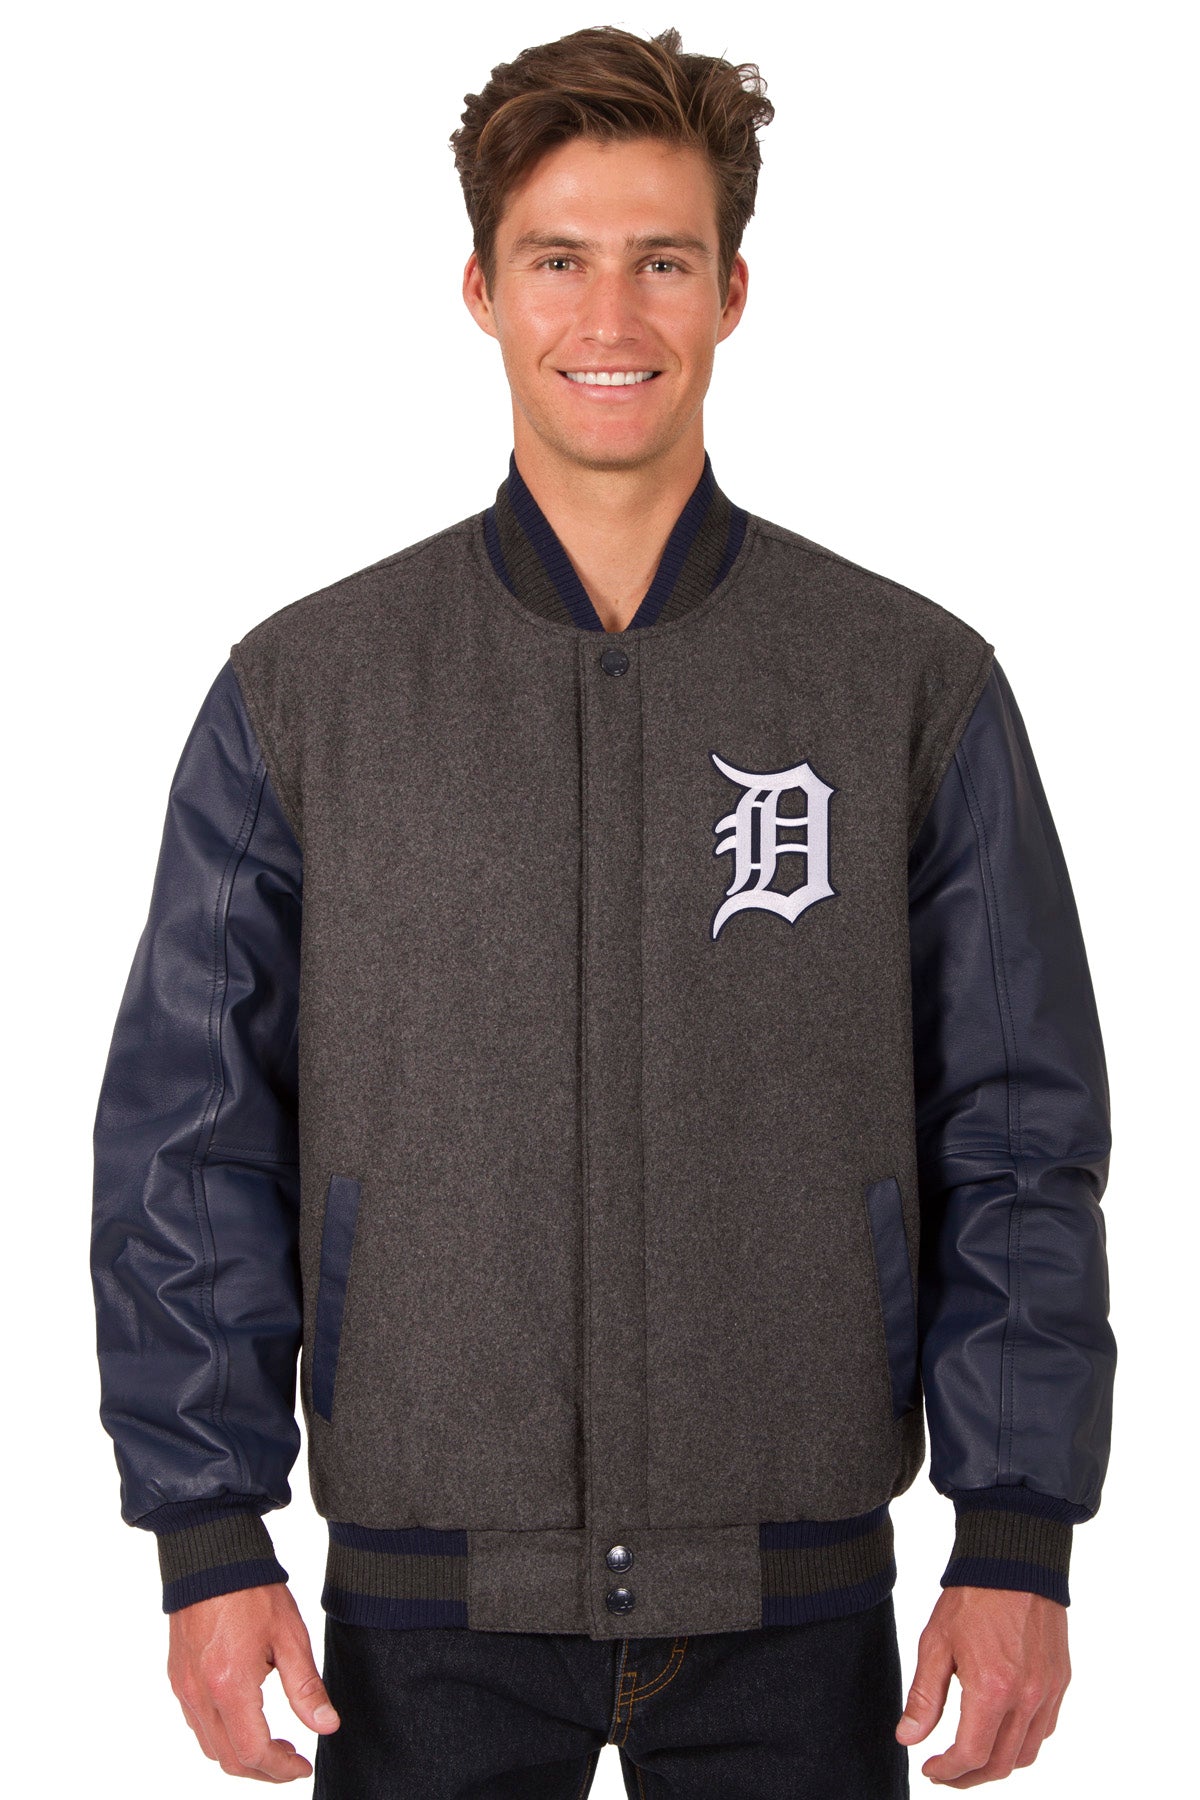 Vintage Detroit Tigers Baseball Jersey Size Medium Gray Made In USA Ravens  Knit